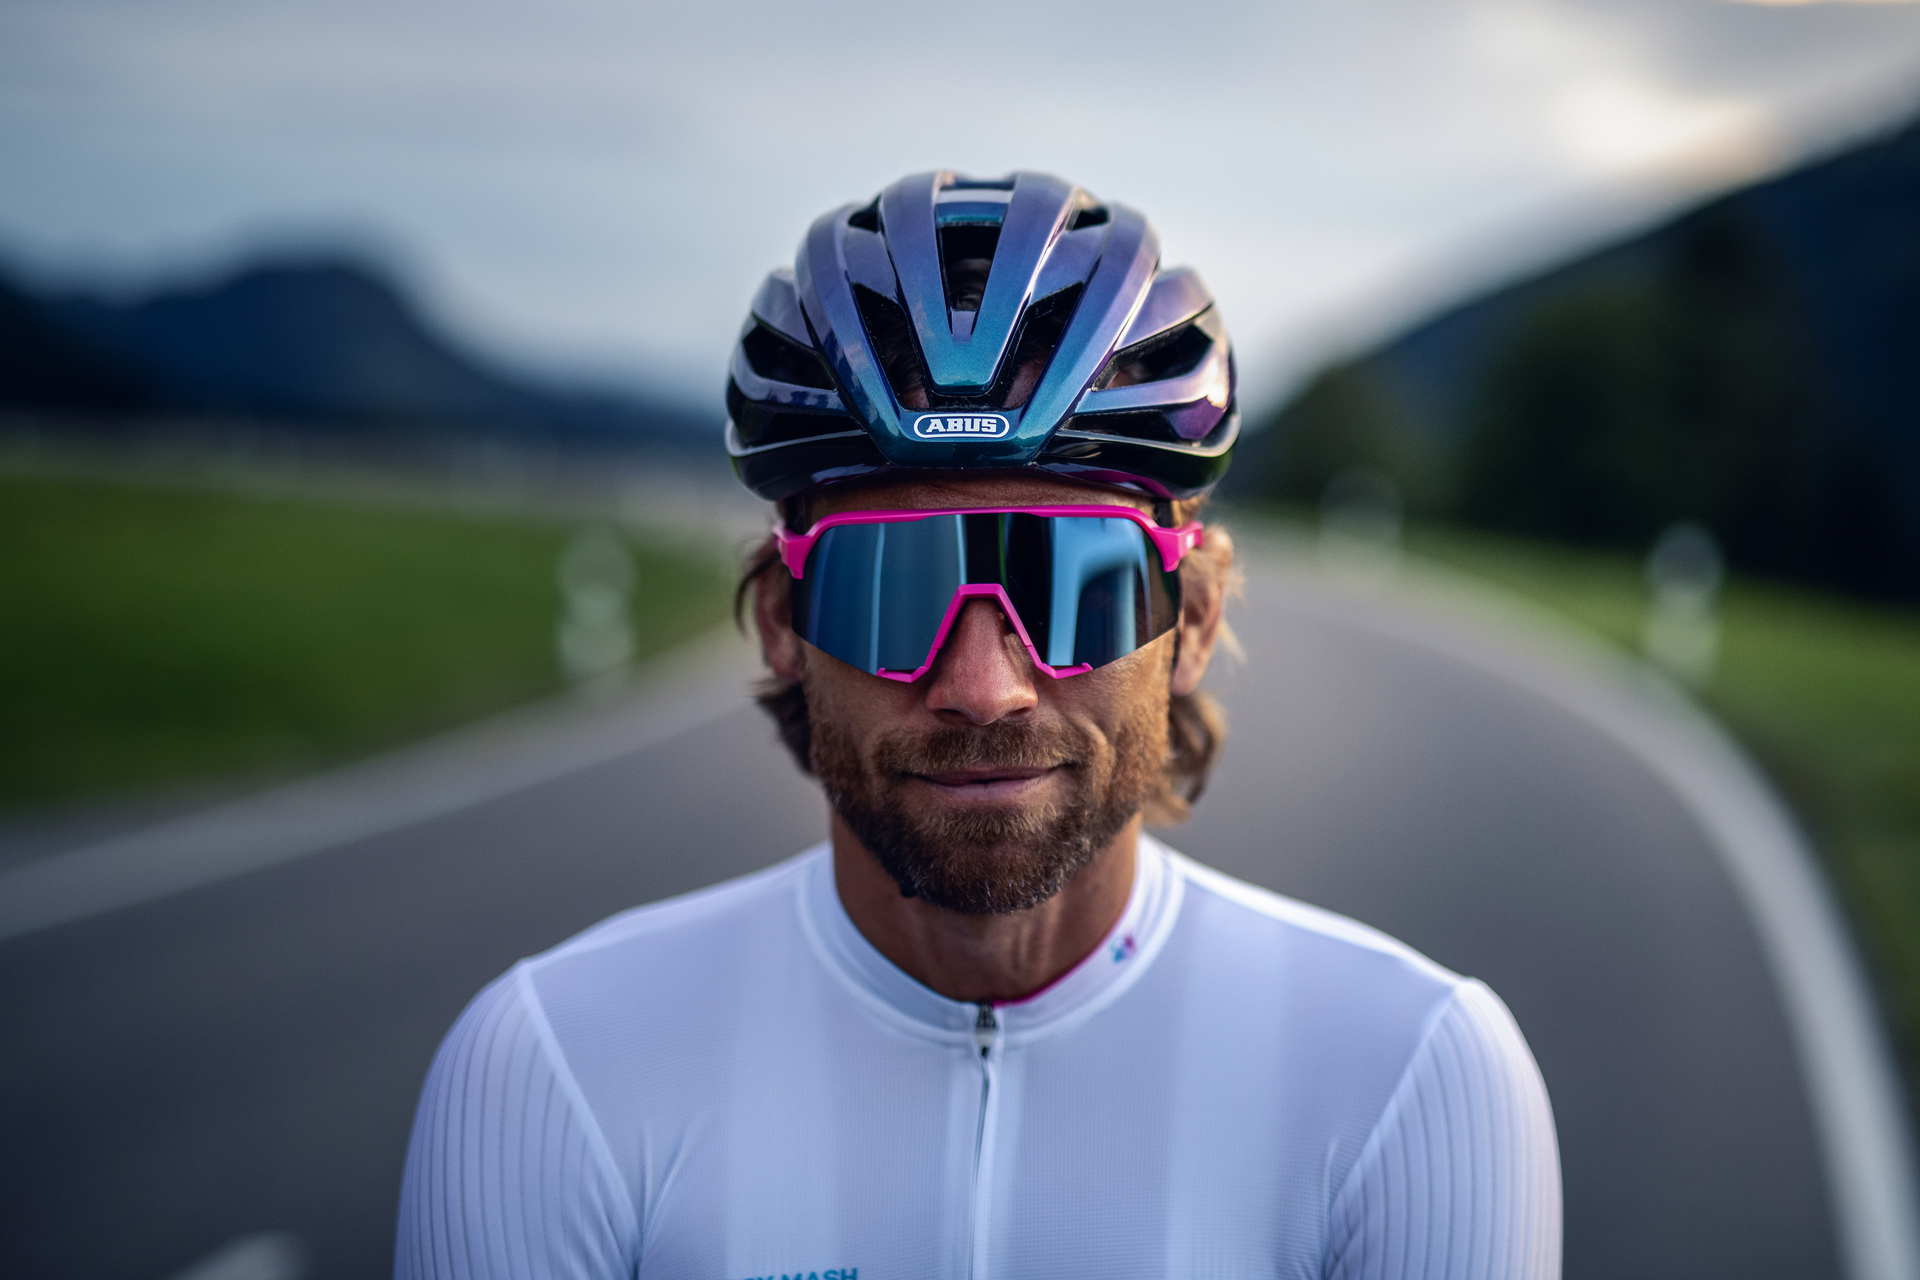 Bike helmet | StormChaser | for road cycling | ABUS